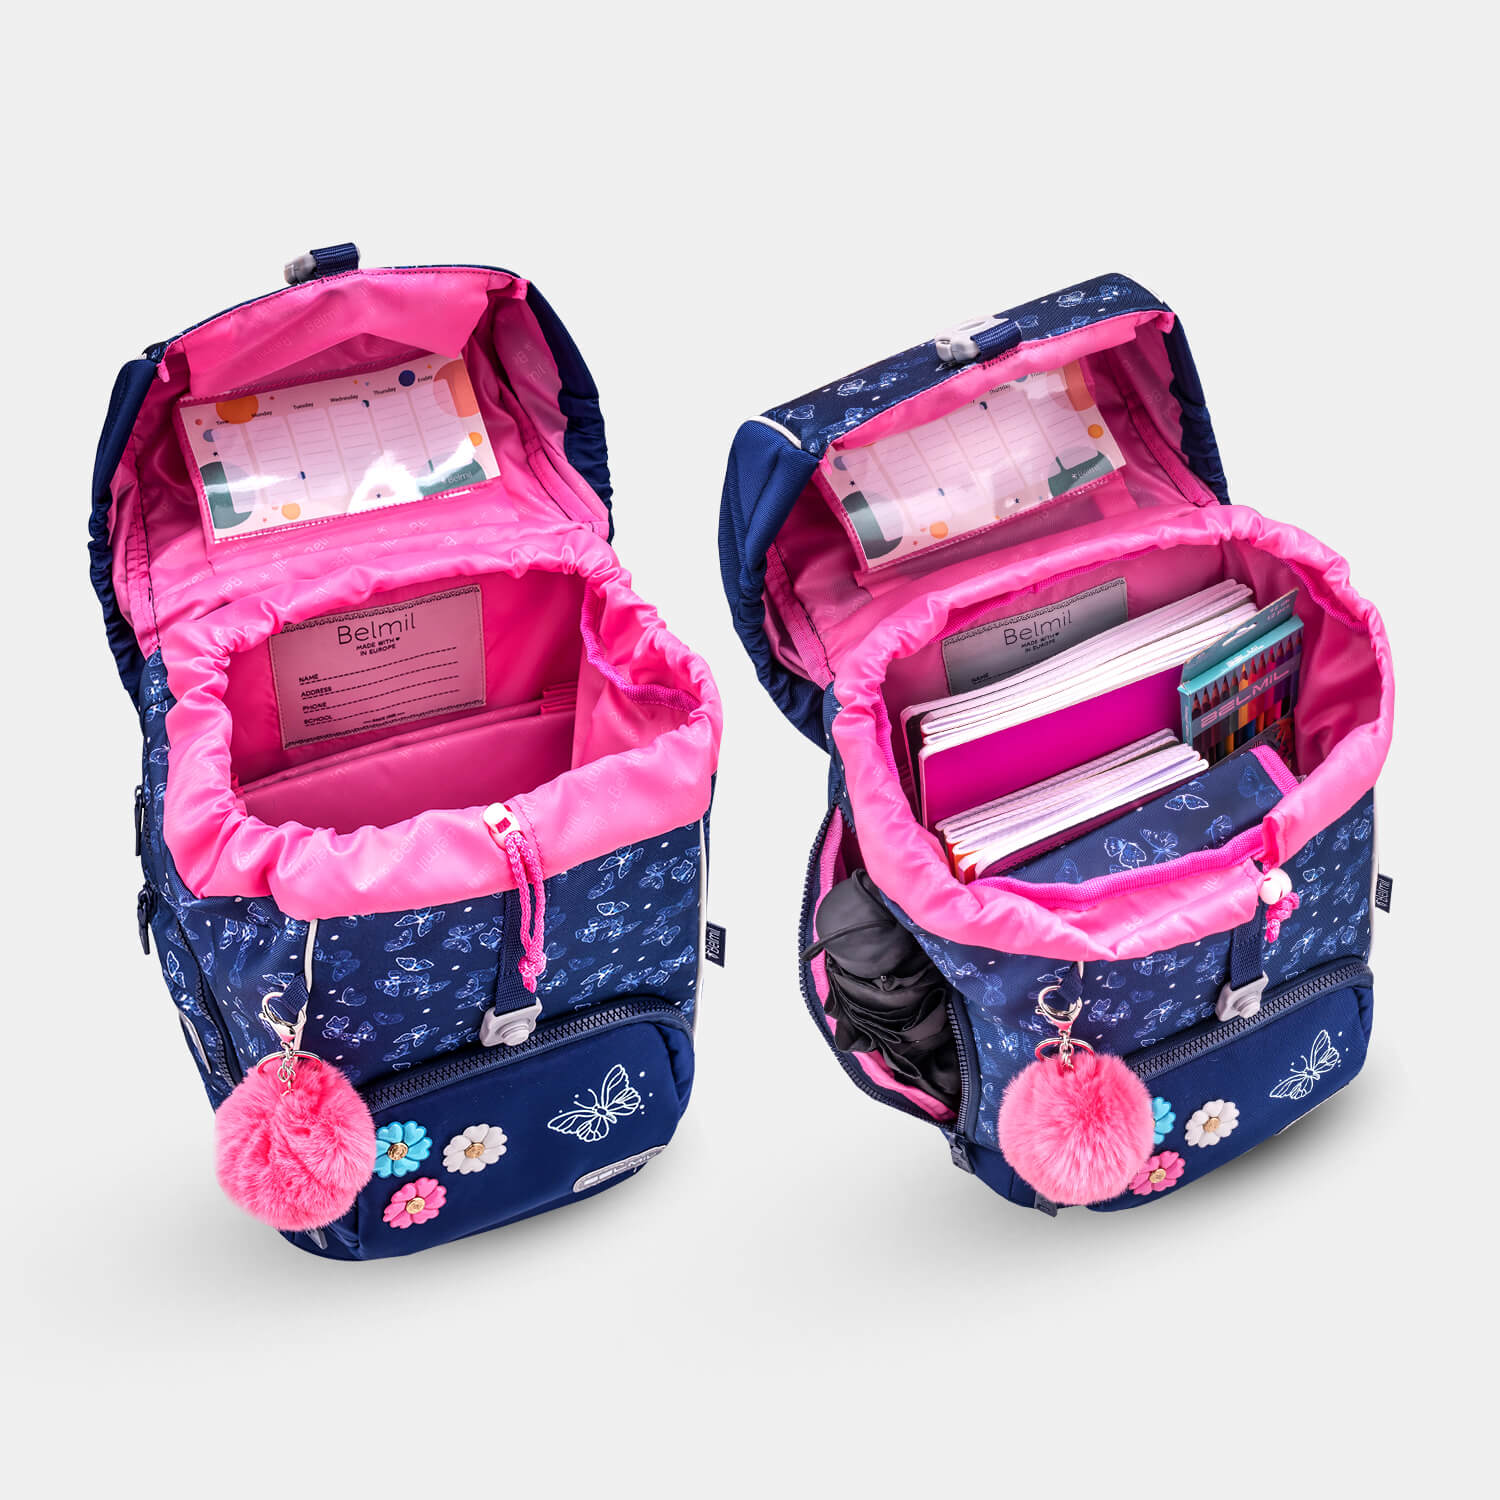 Comfy Plus Sapphire Schoolbag